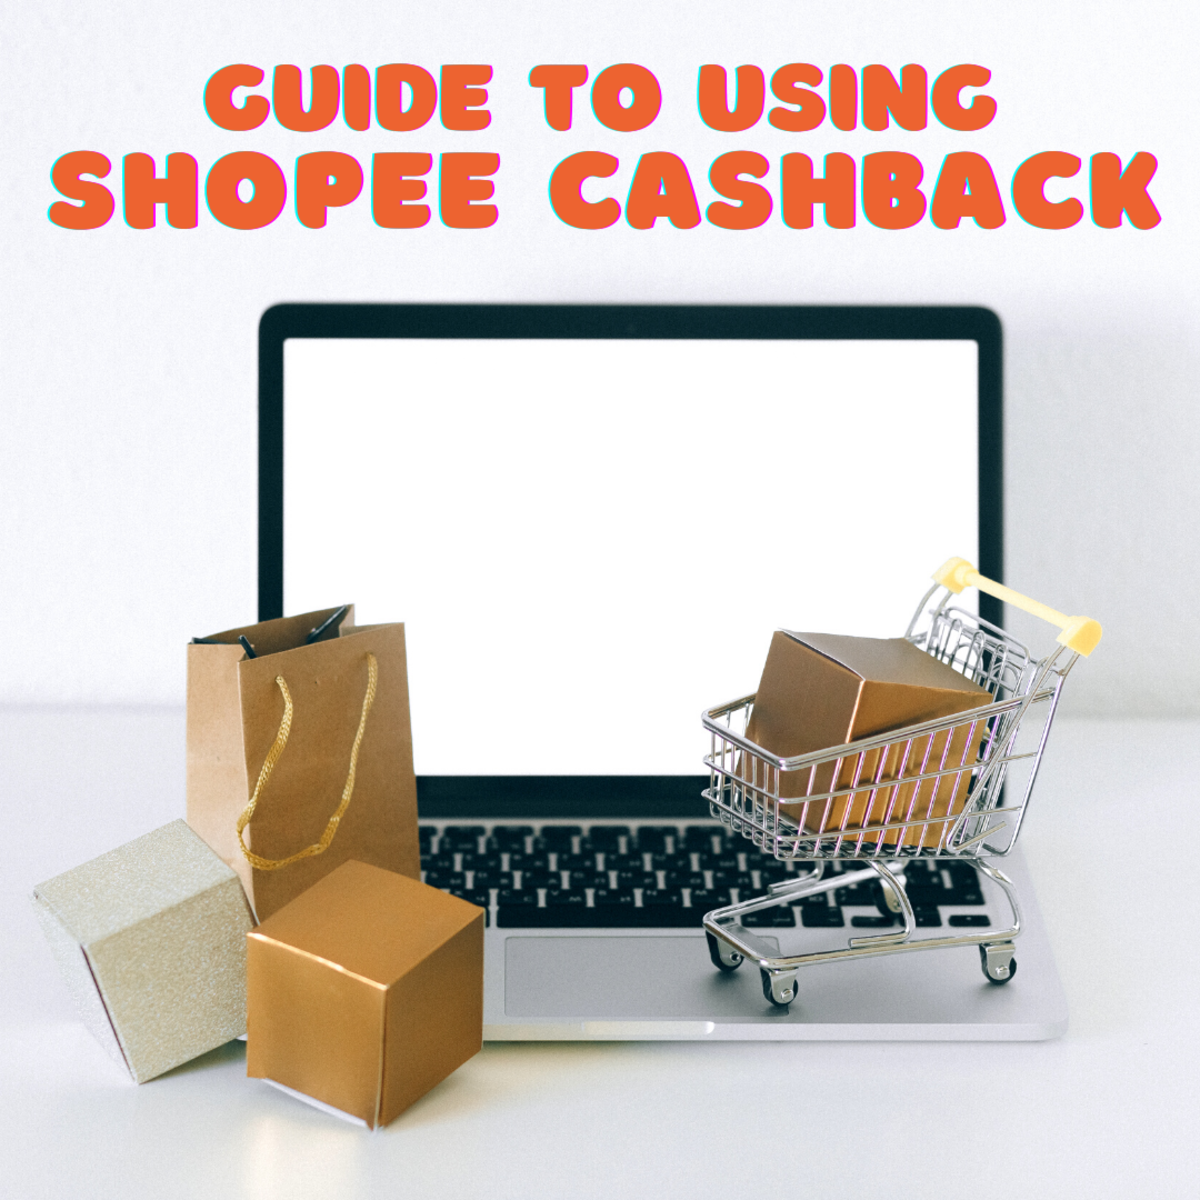 How Does Shopee Cashback Work?